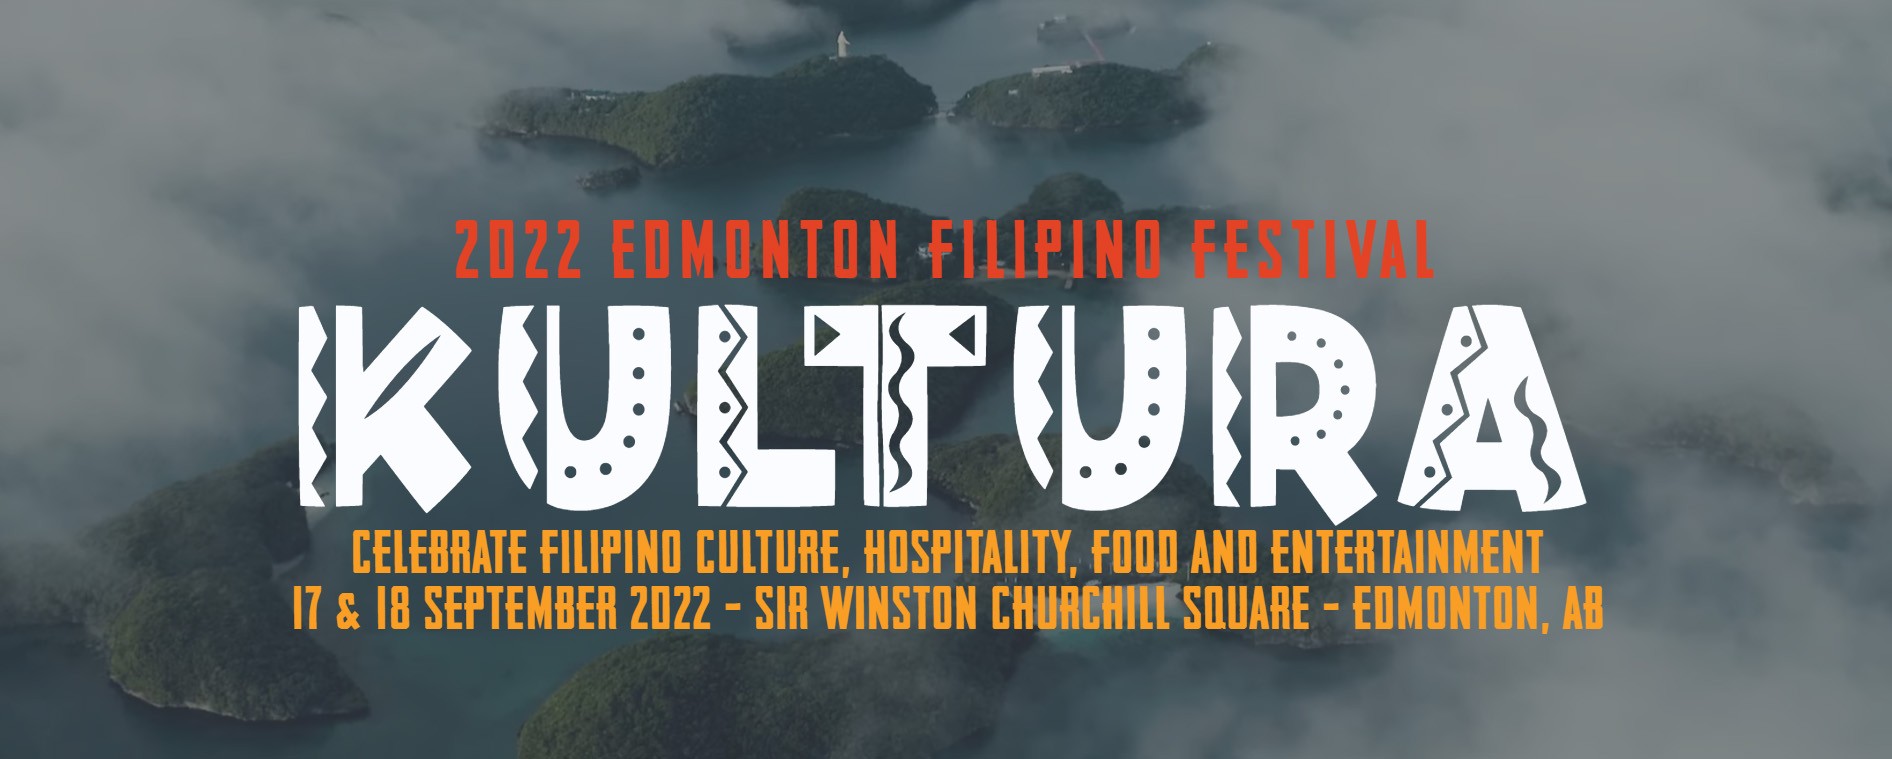 Kultura Edmonton Filipino Festival